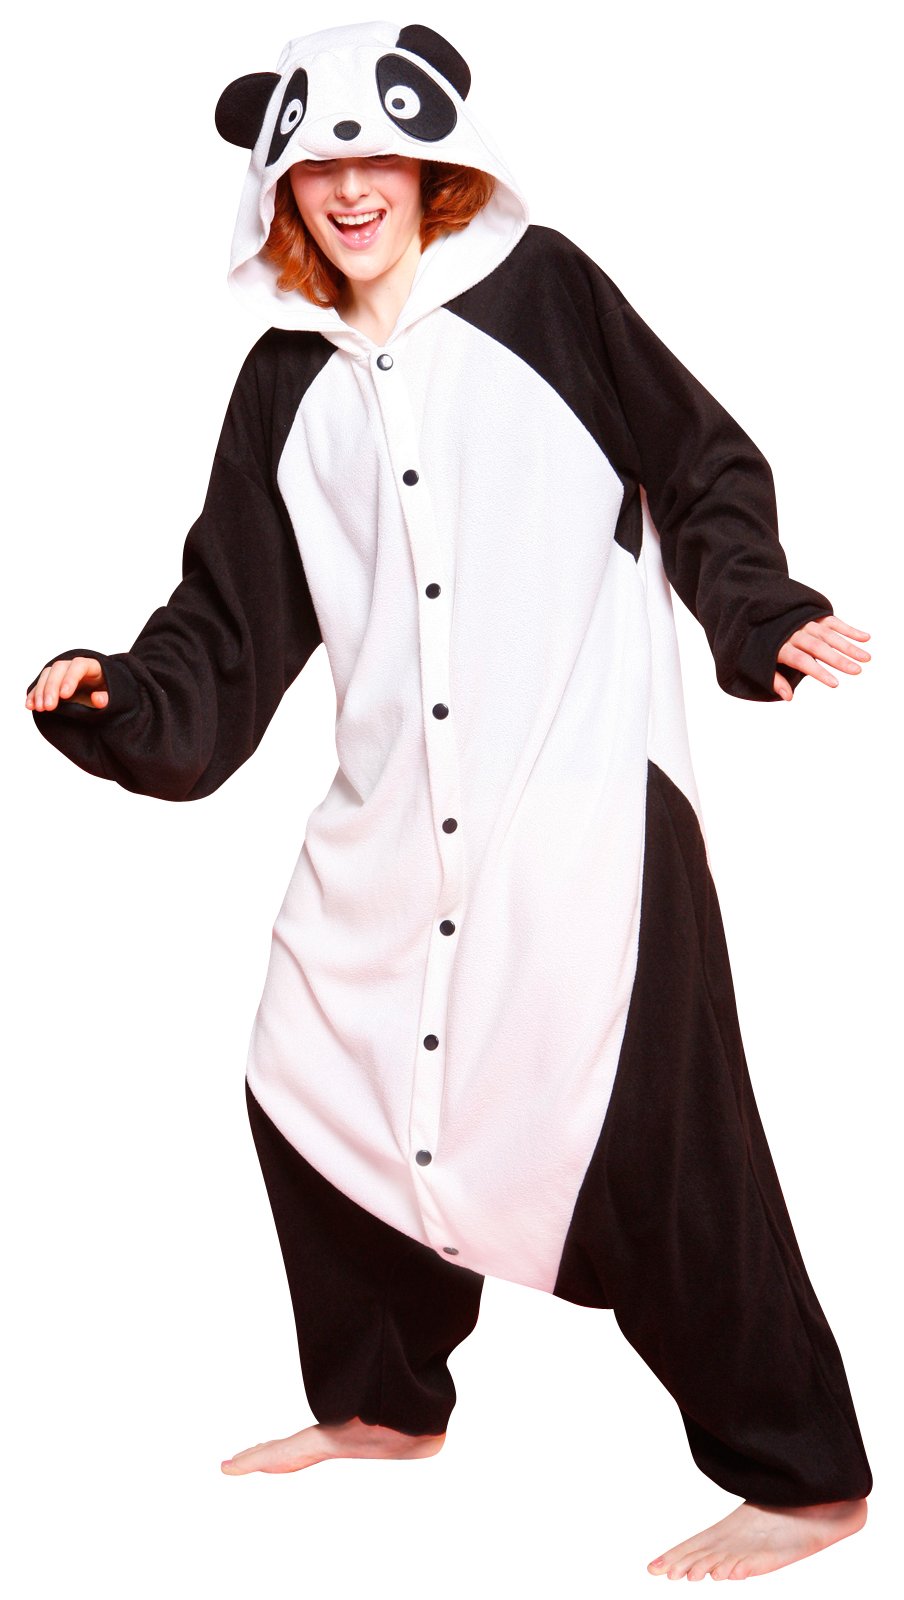 Panda Adult Costume